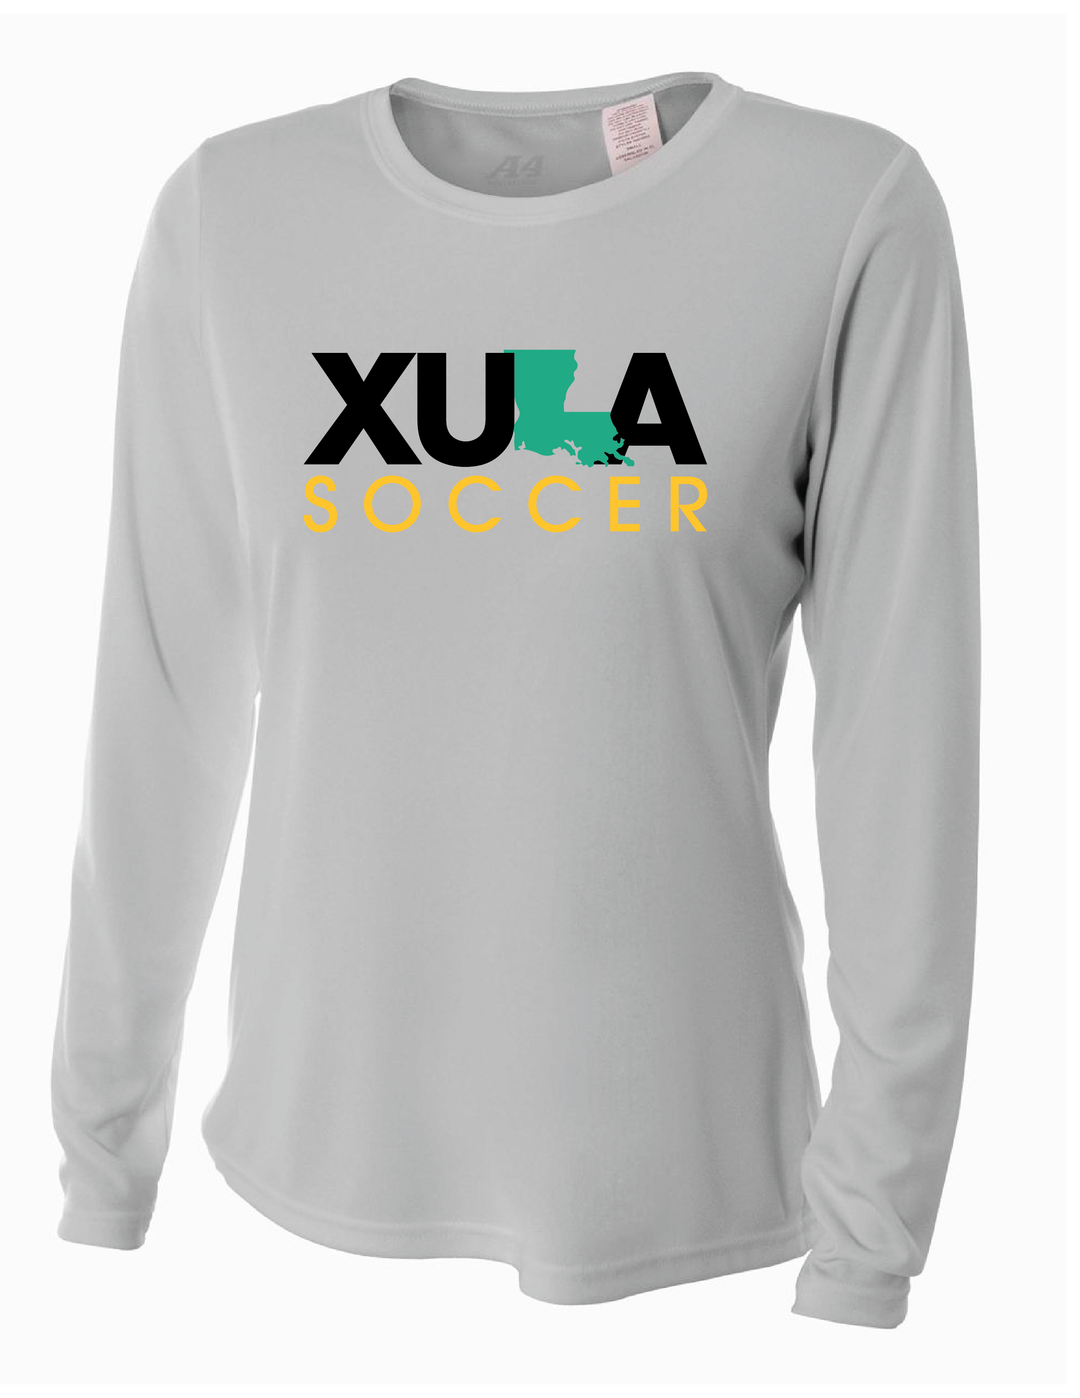 XULA Soccer Long-Sleeve Performance Shirt Xavier University Sport Grey Womens Small - Third Coast Soccer